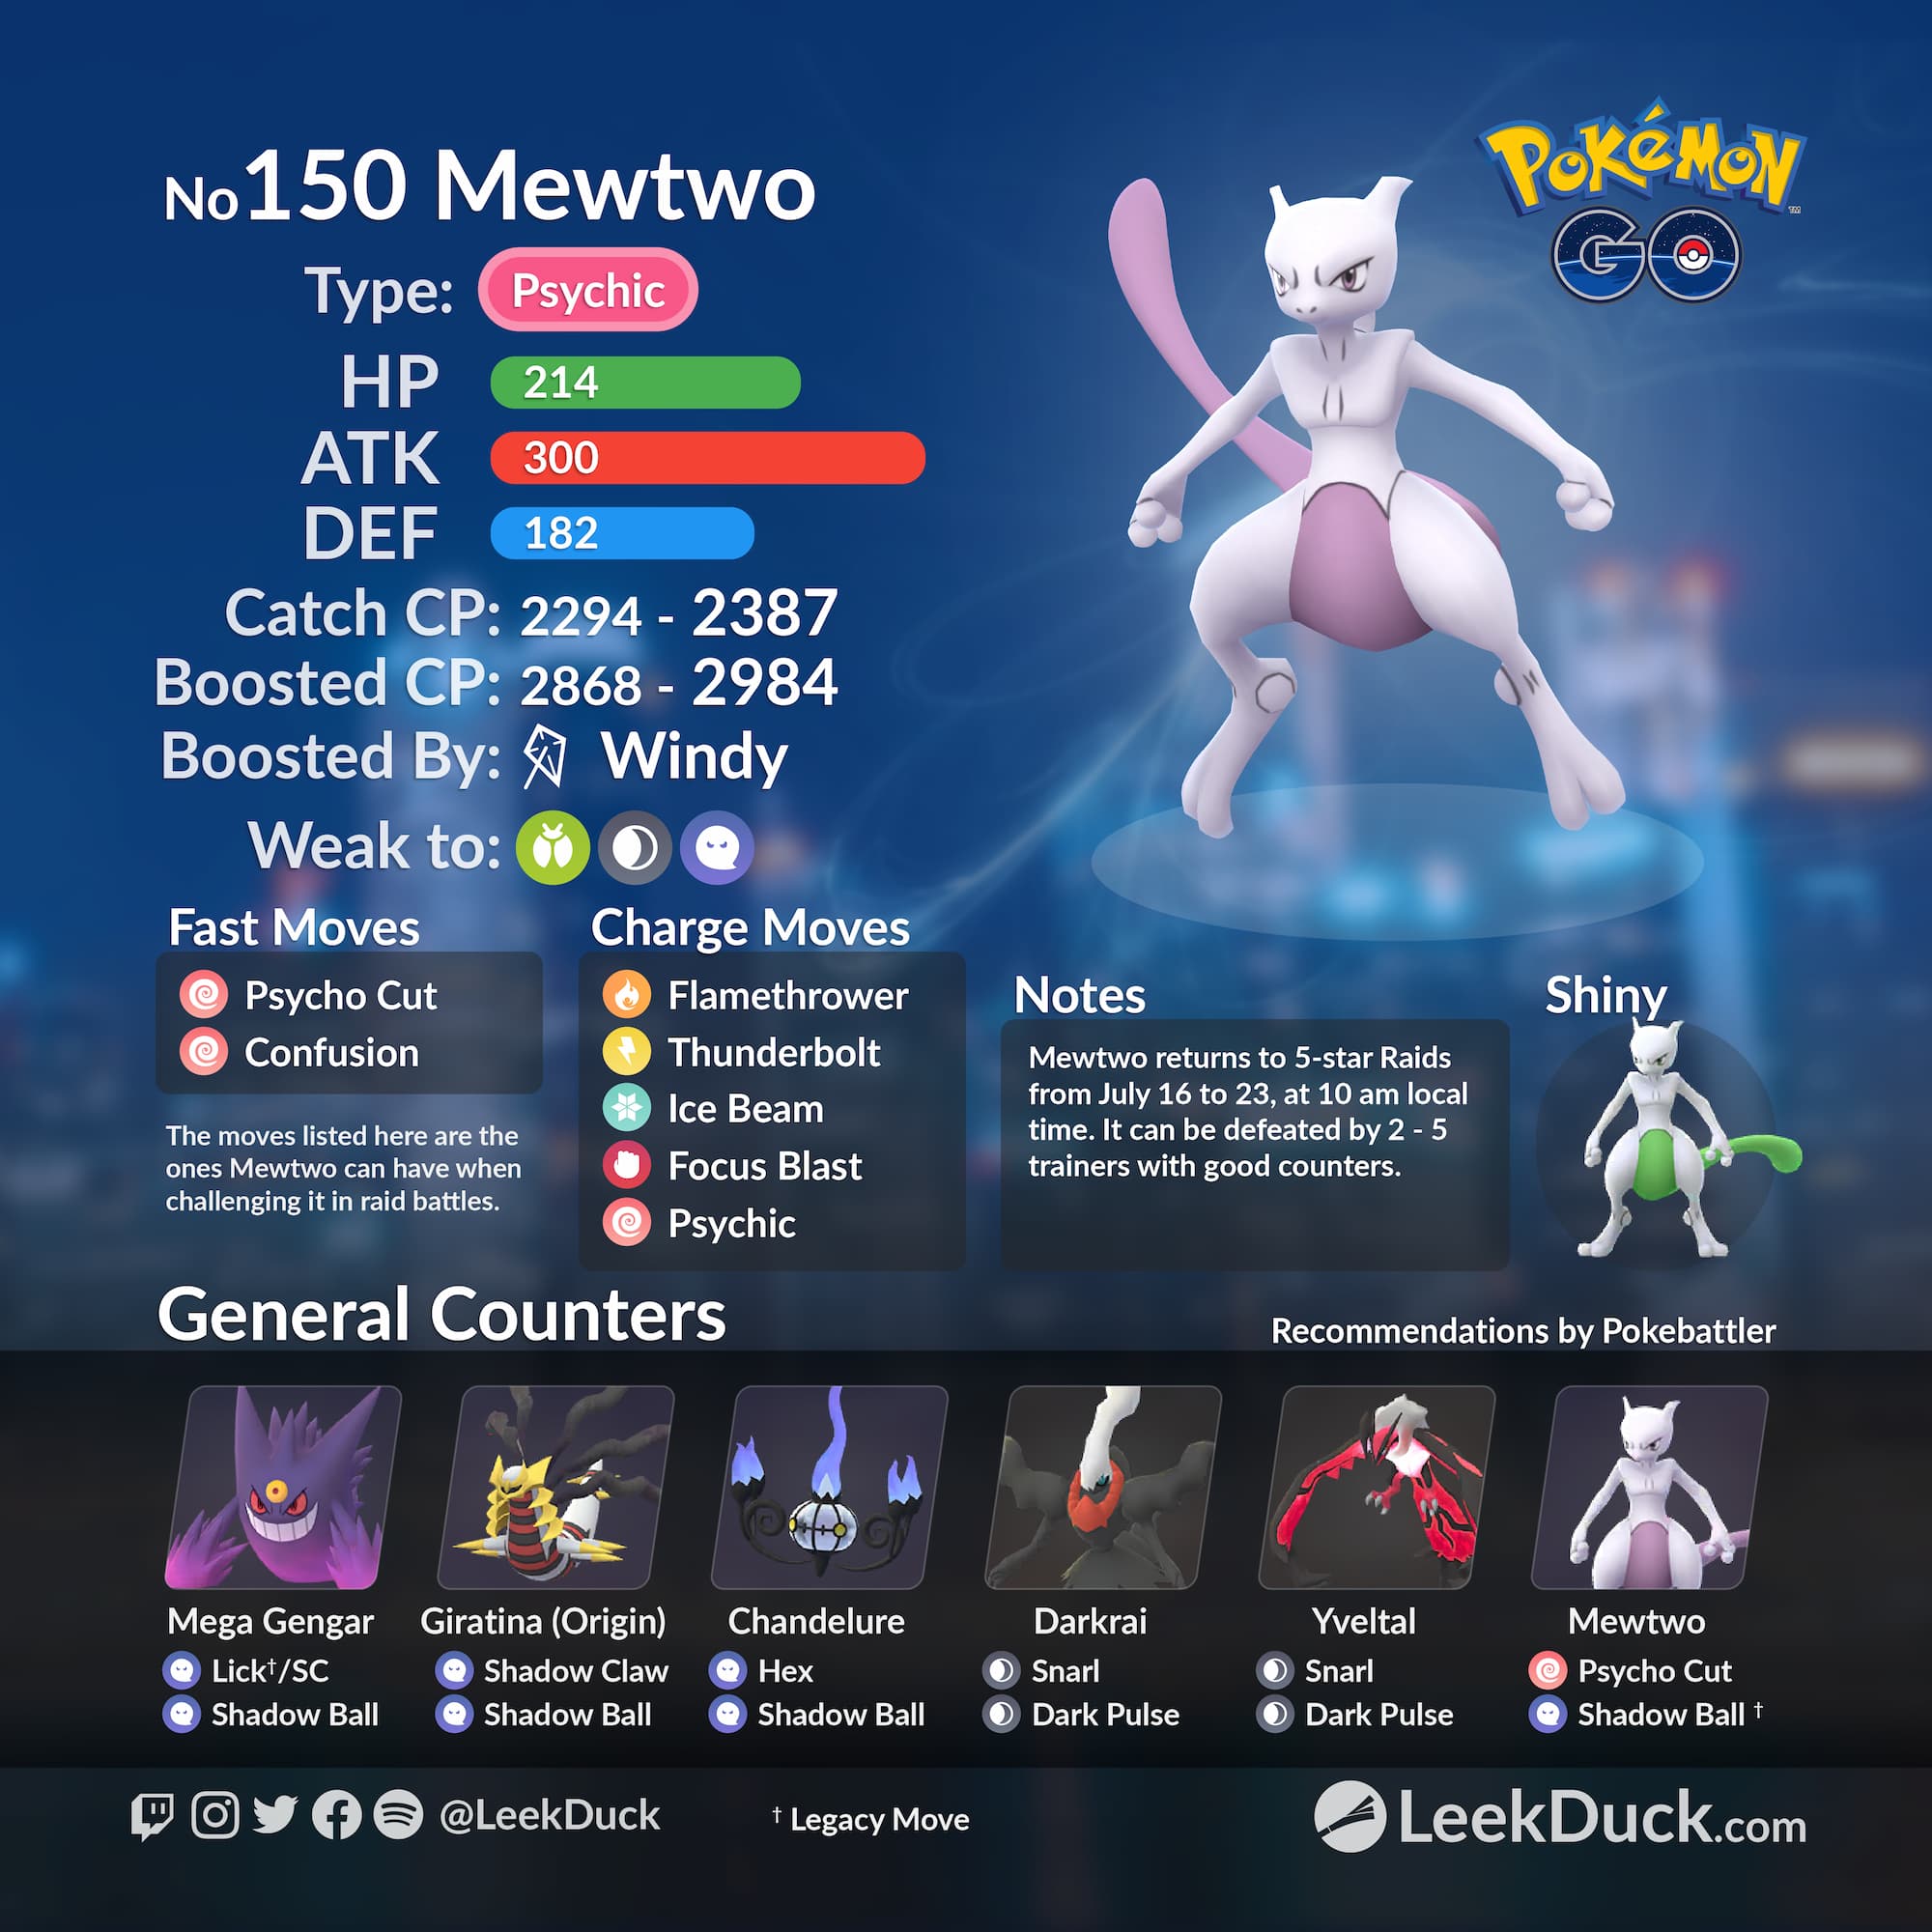 Mewtwo return to Raid Battles Leek Duck Pokémon GO News and Resources